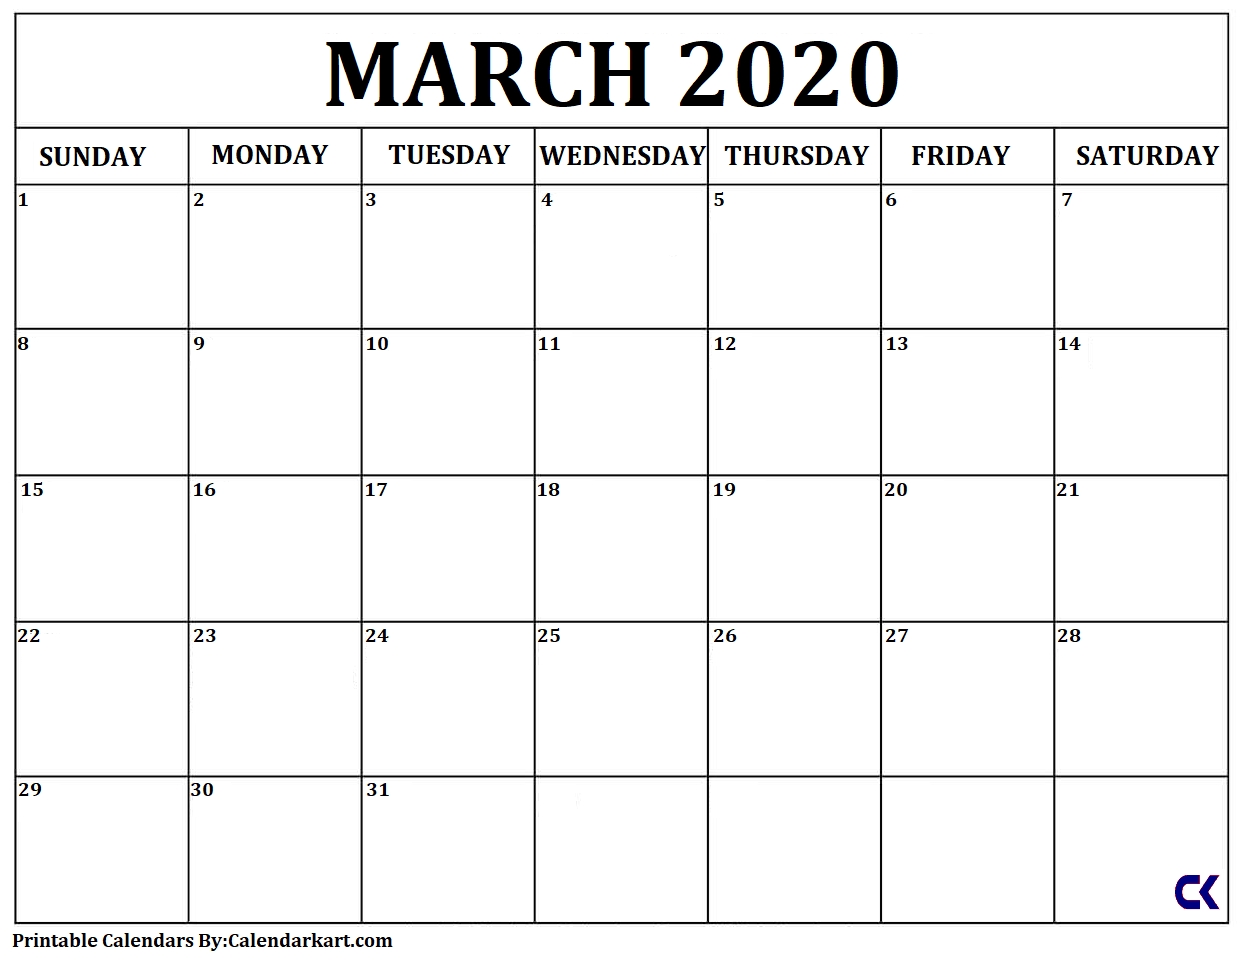 Printable March 2020 Calendar » Calendarkart